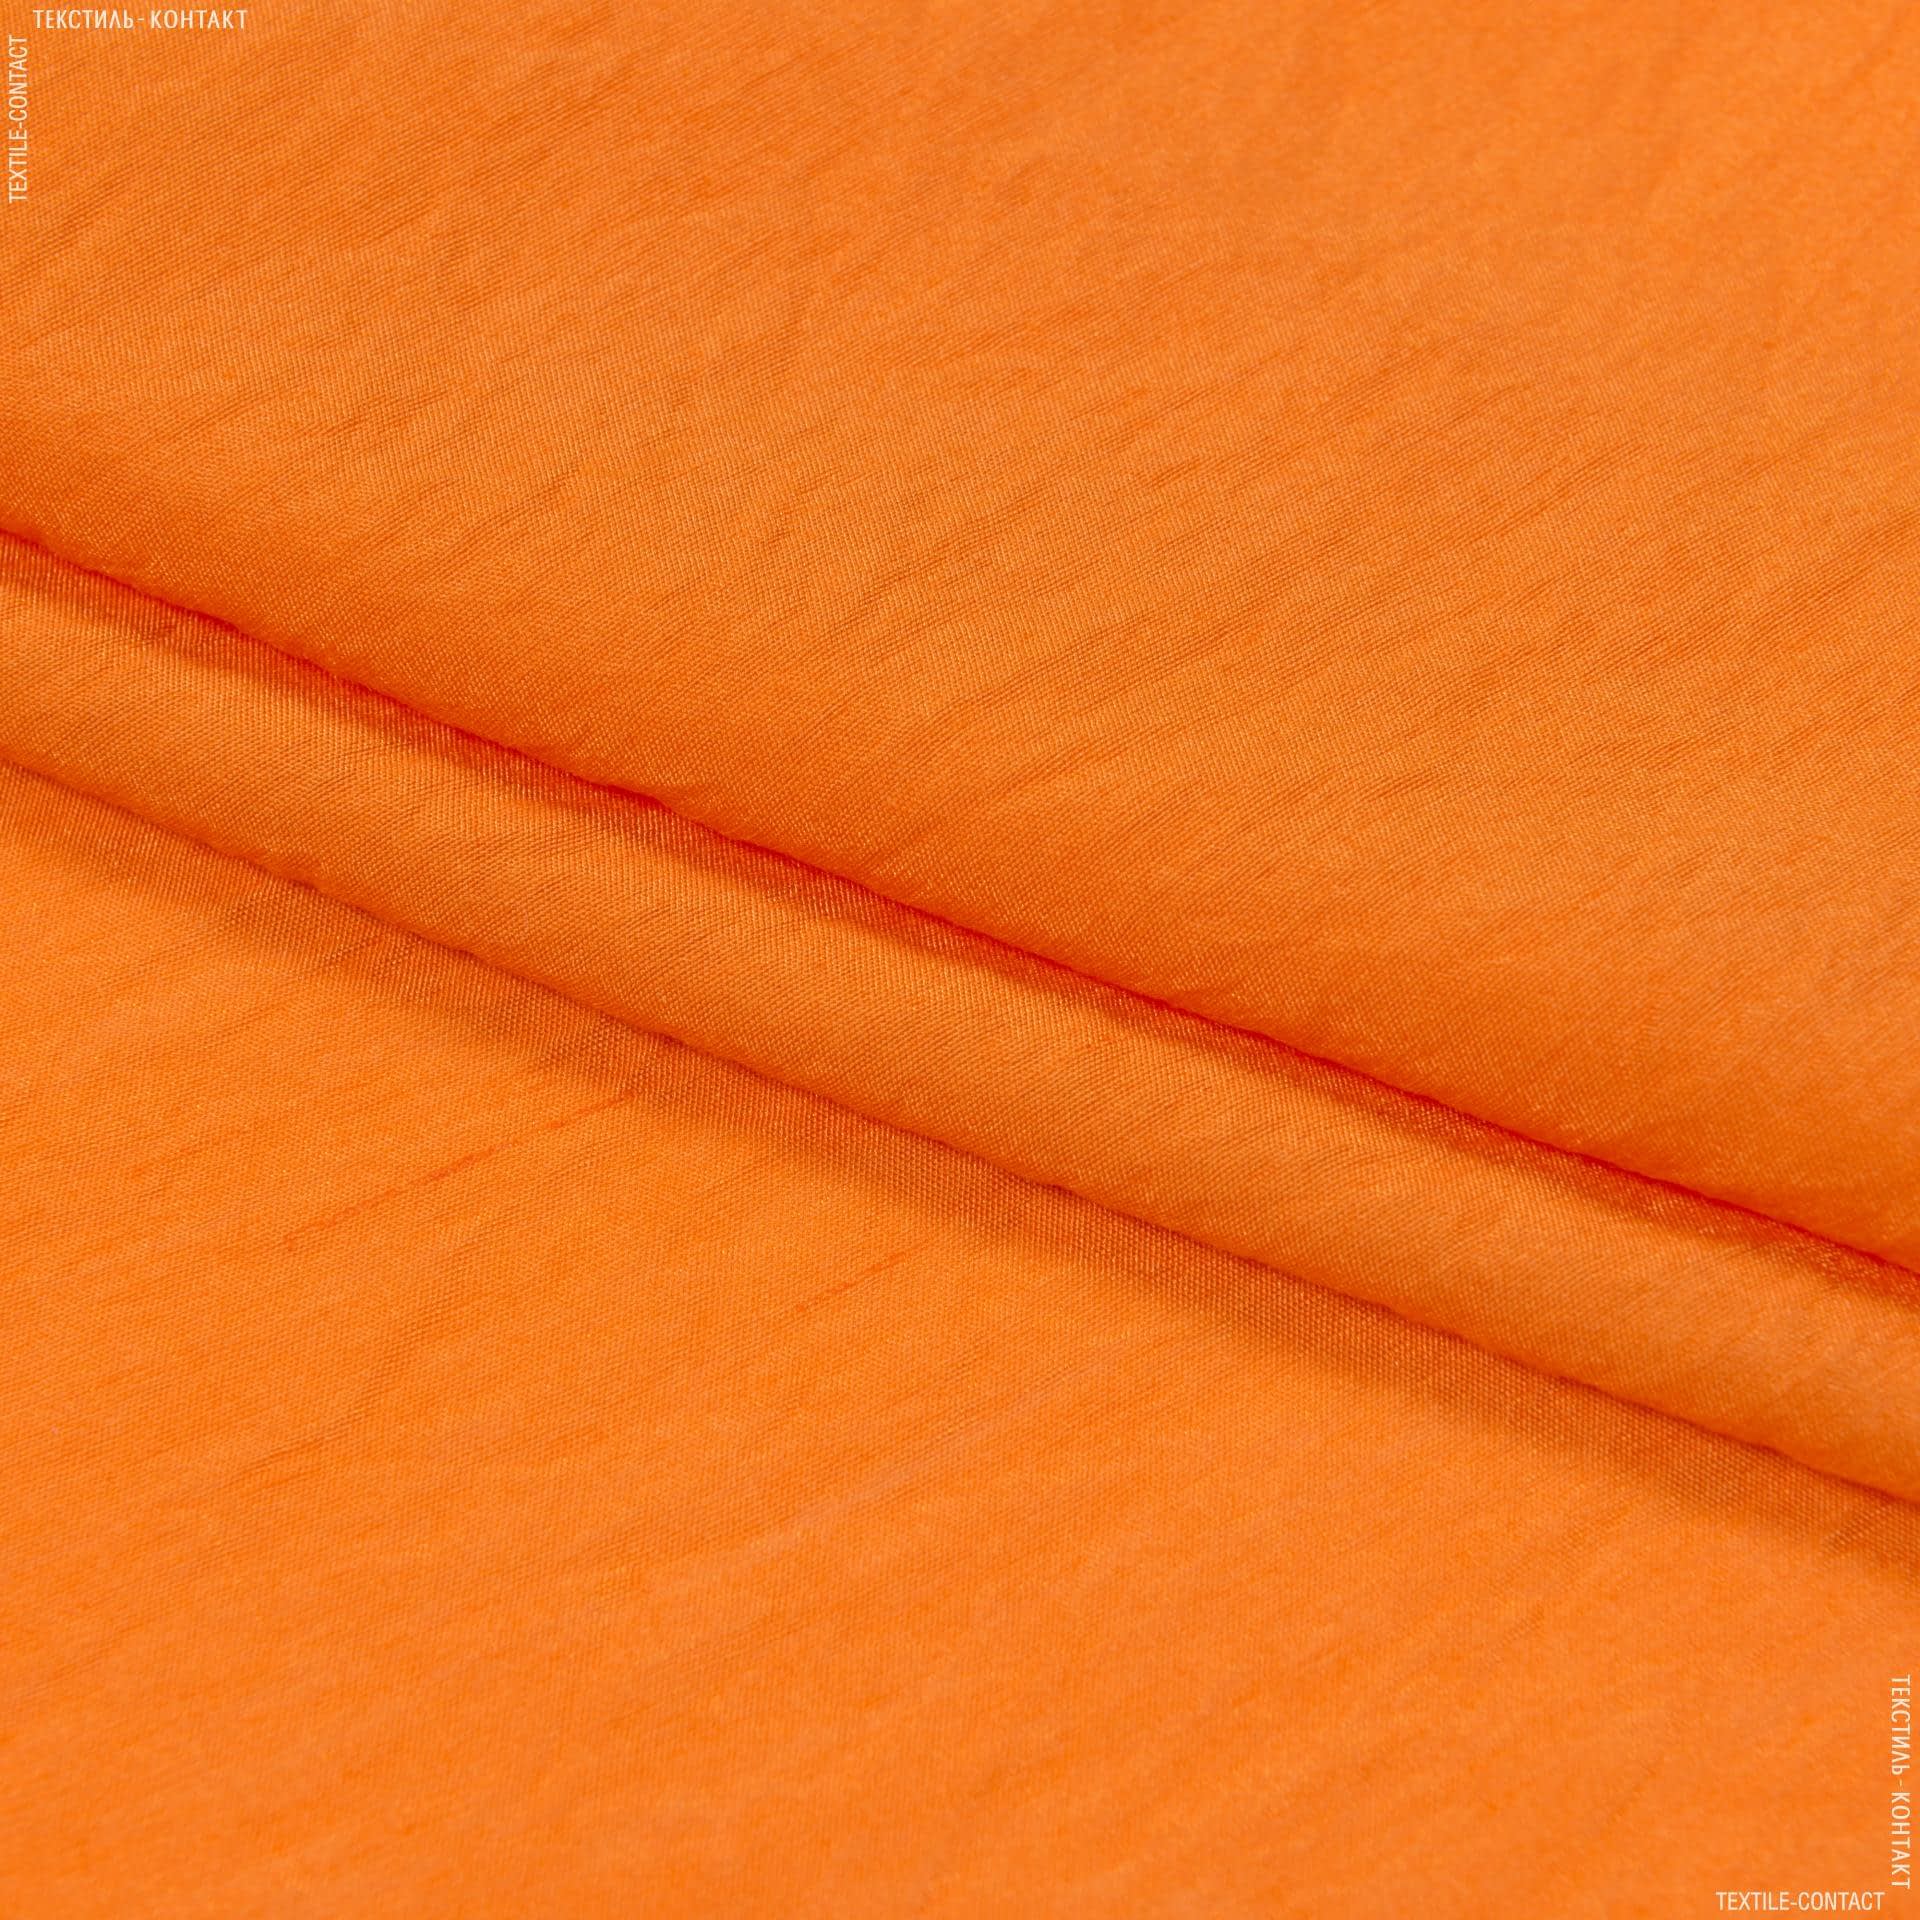 Ткани для блузок - Батист блестящий креш оранжевый